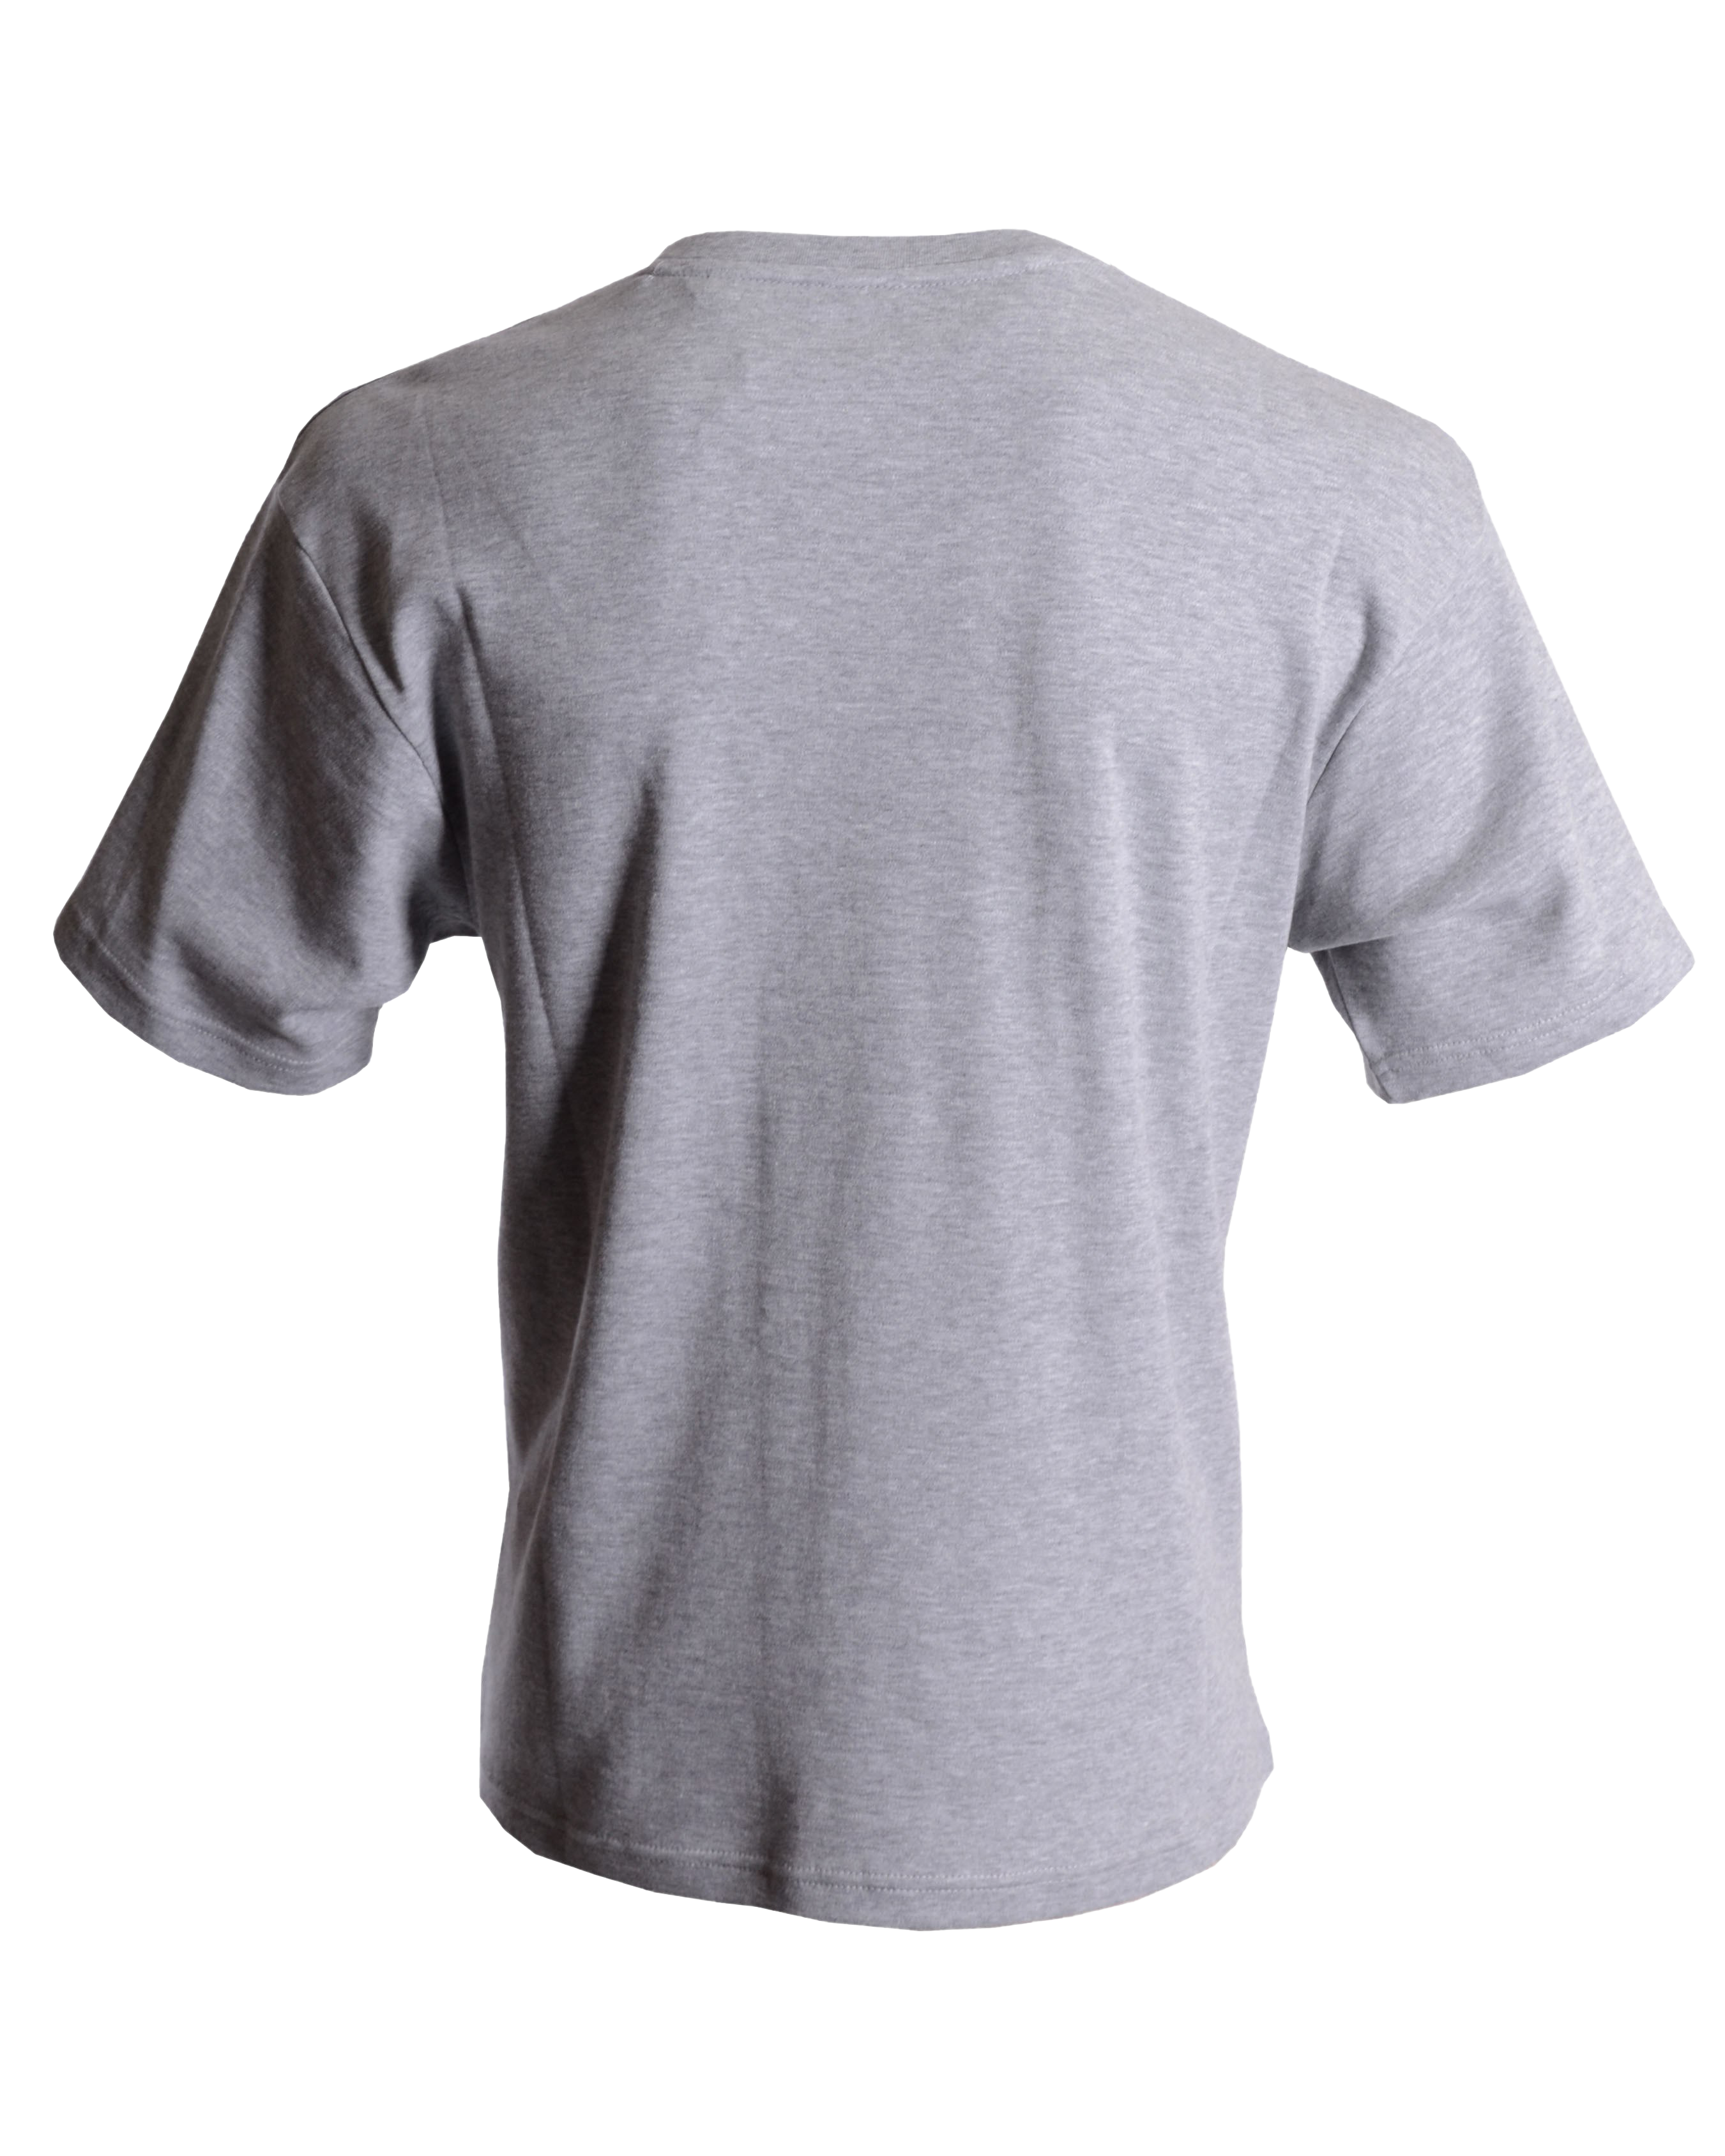 Plain Grey T-Shirt PNG Photo